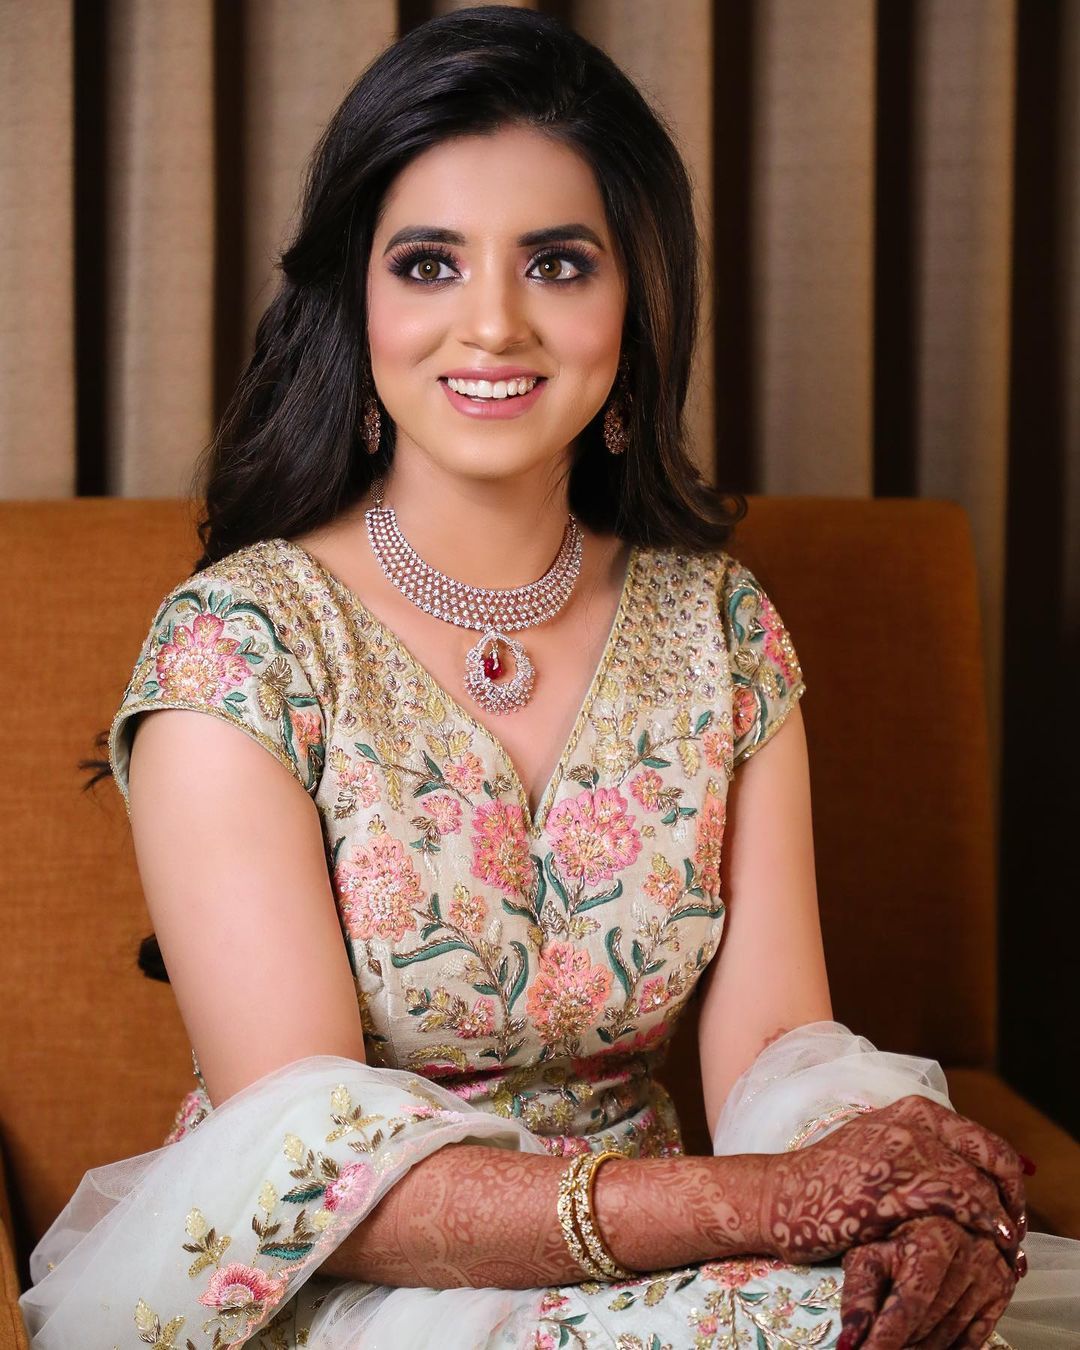 Bridal Makeup Ideas To Match Your Red Wedding Lehenga :: Khush Mag